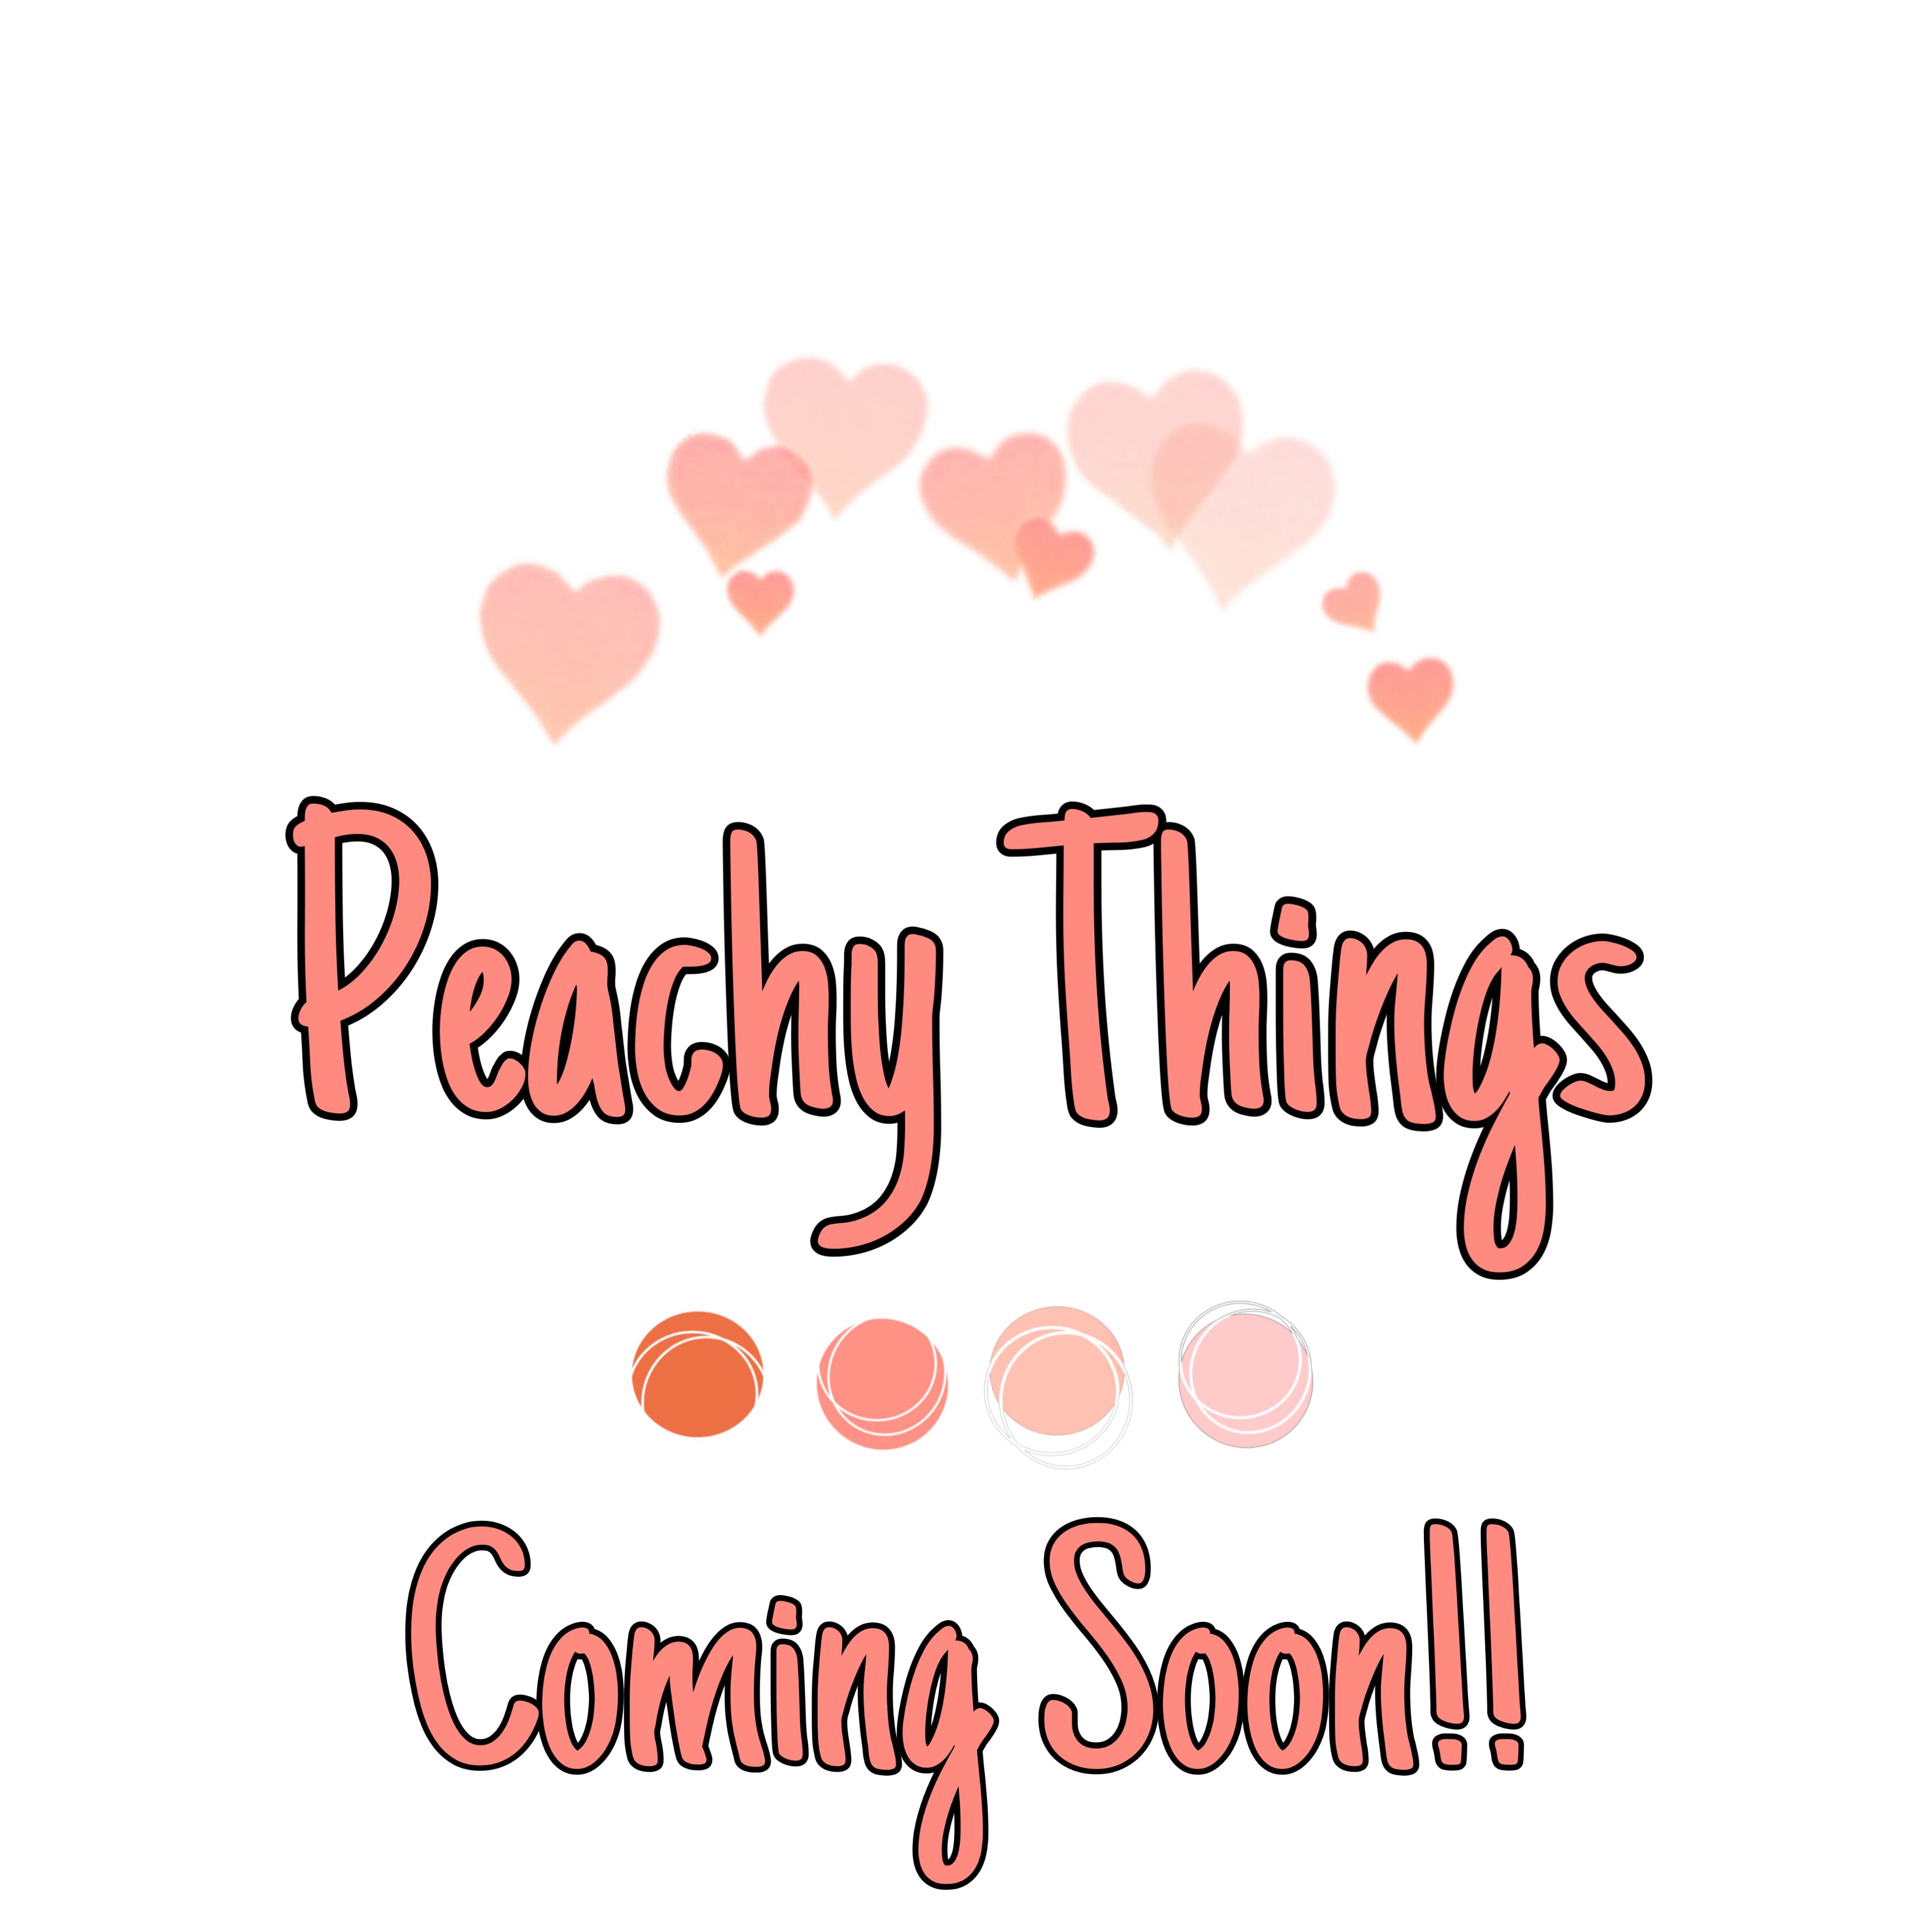 Peachy Things